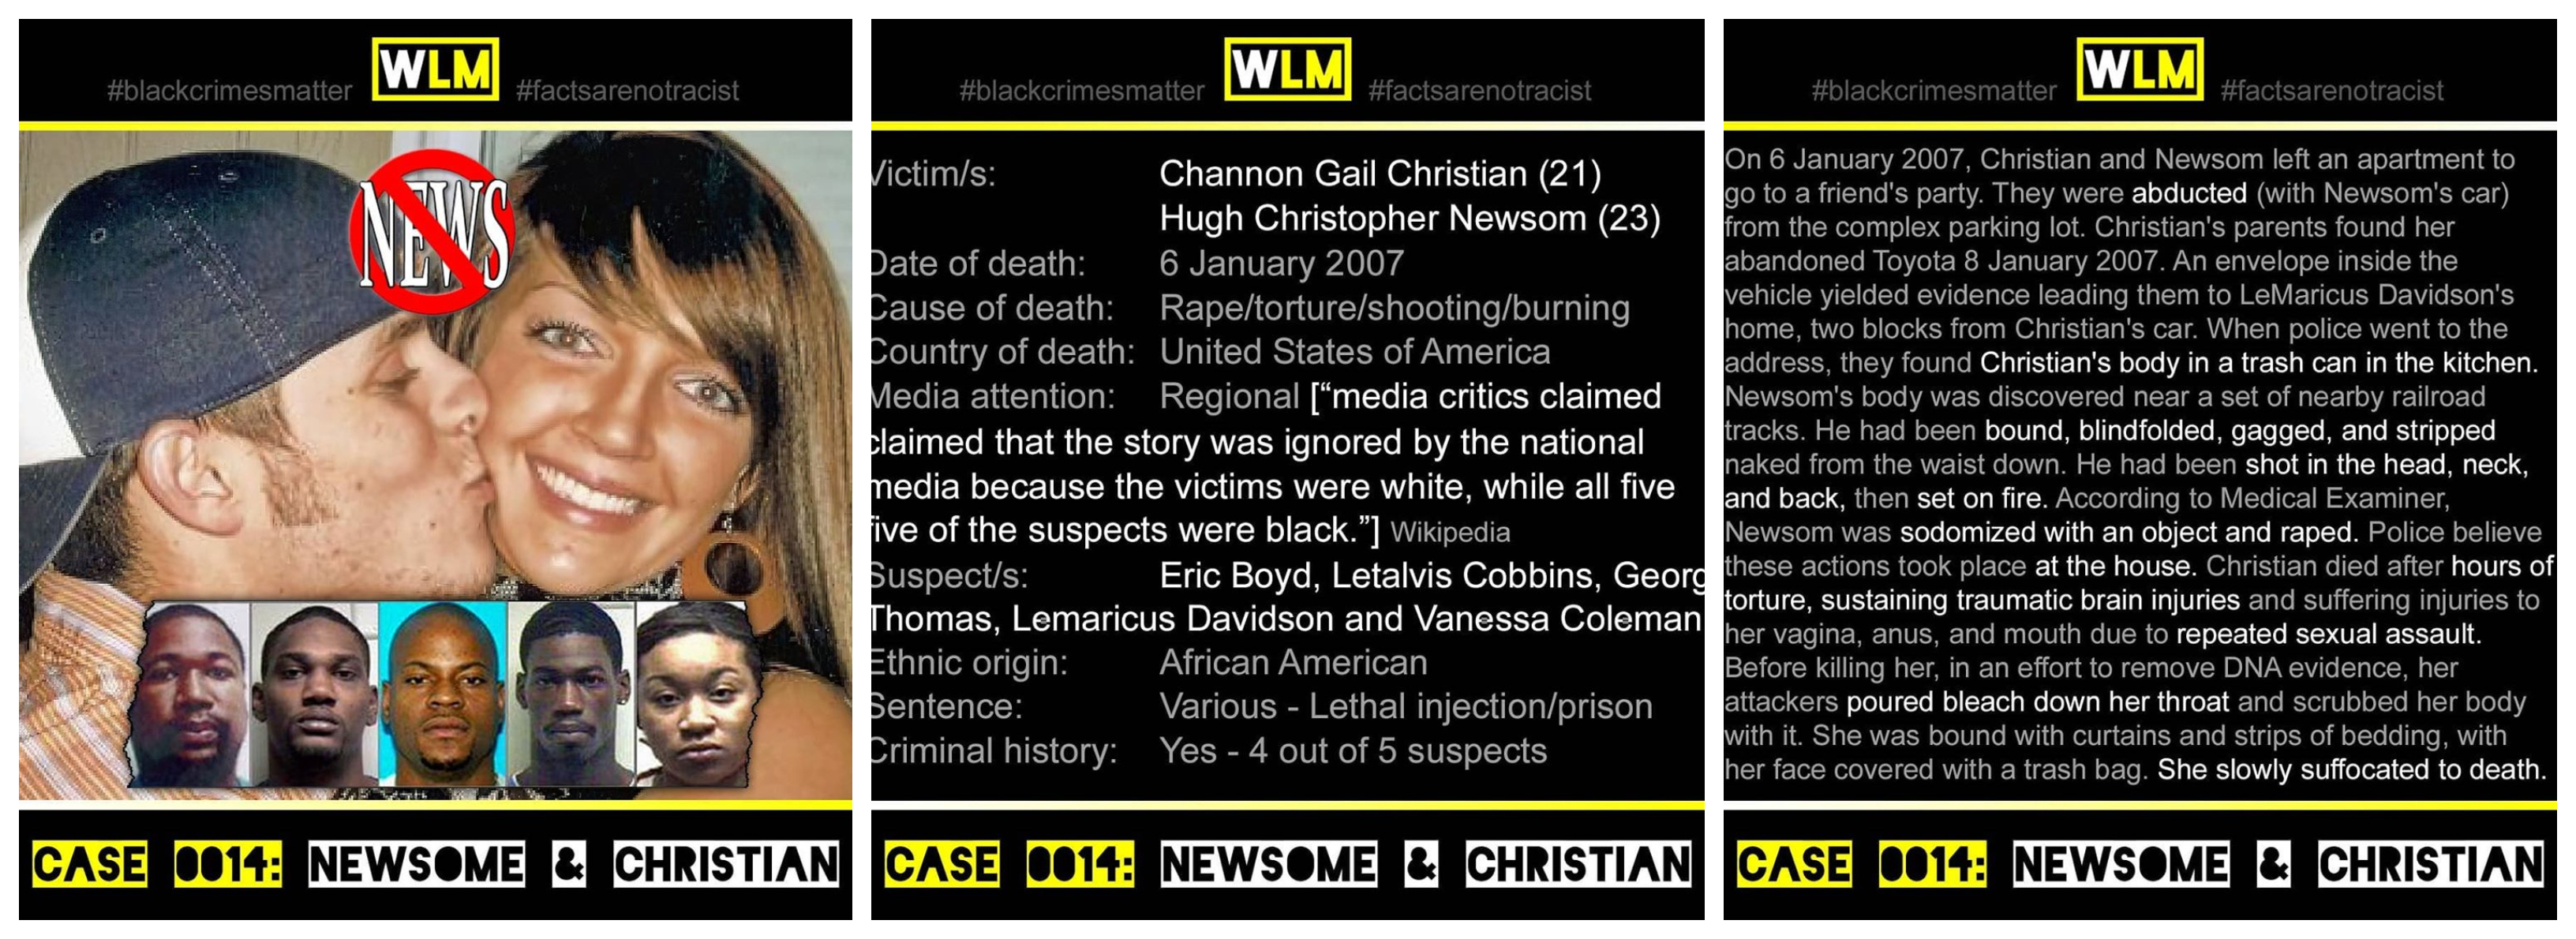 case-014-newsome-christian